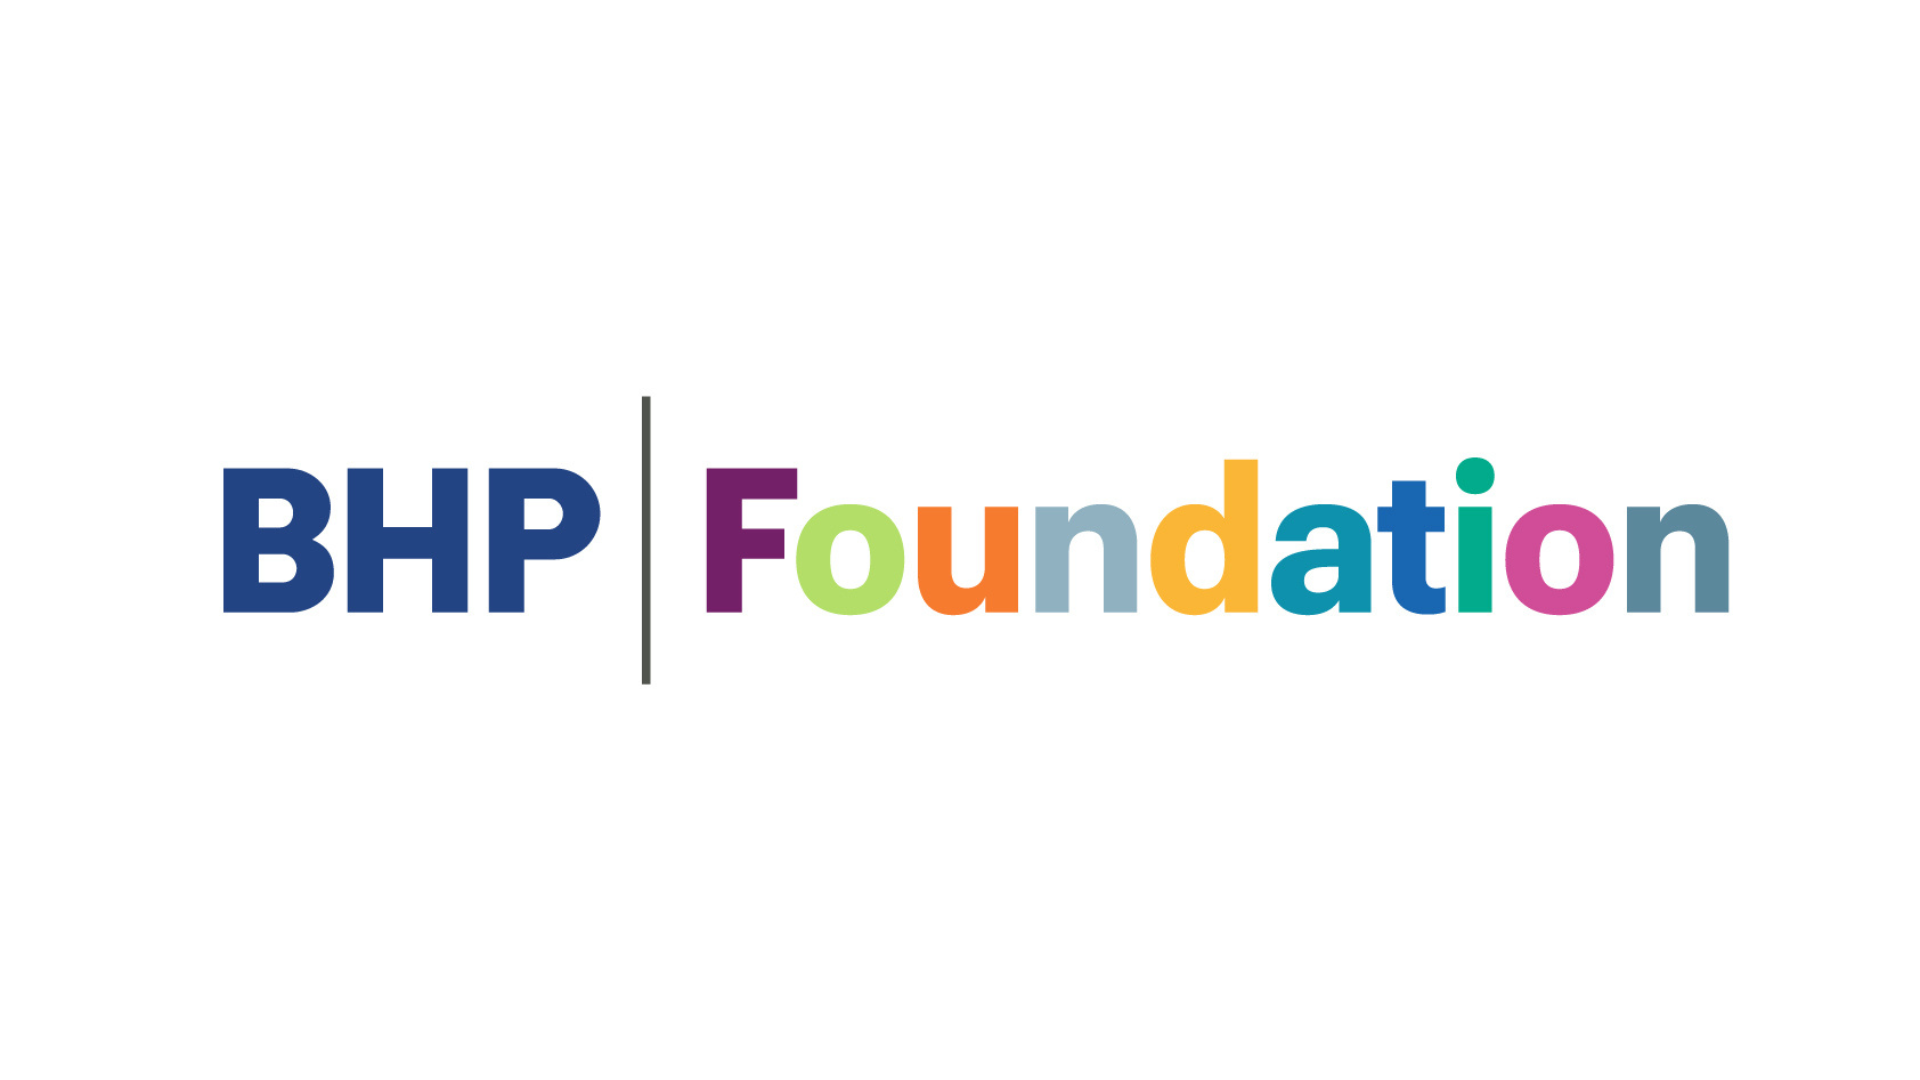 The BHP Foundation